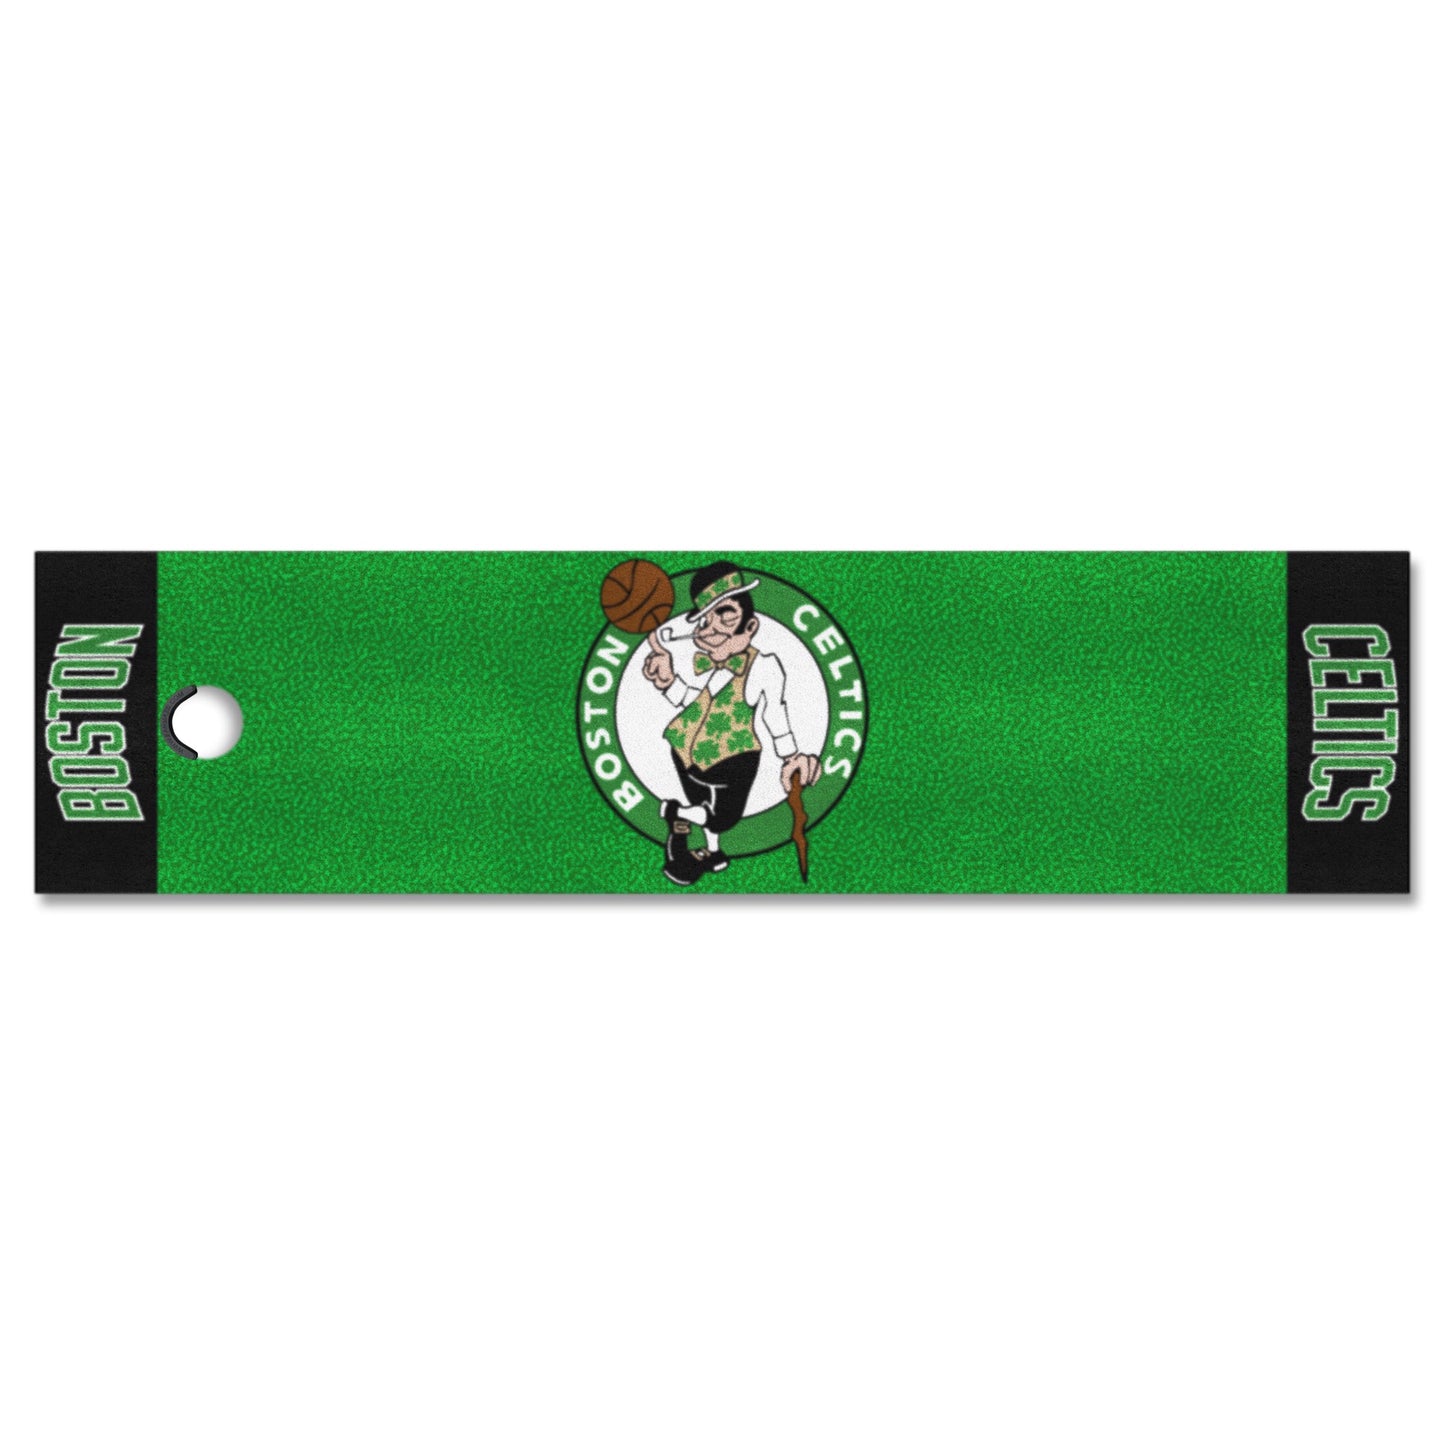 Boston Celtics Green Putting Mat by Fanmats